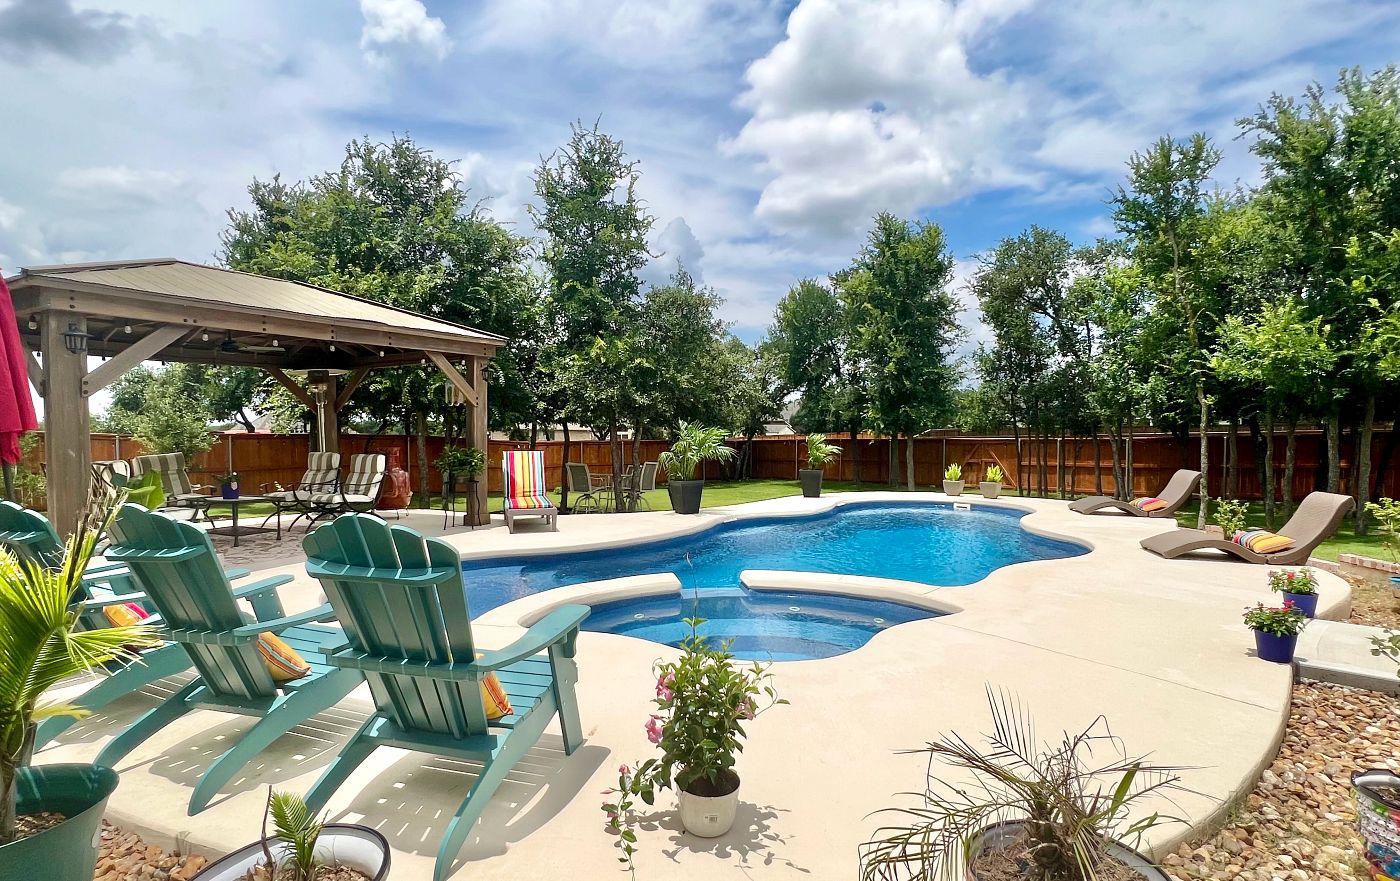 fiberglass pool and spa in large southern backyard